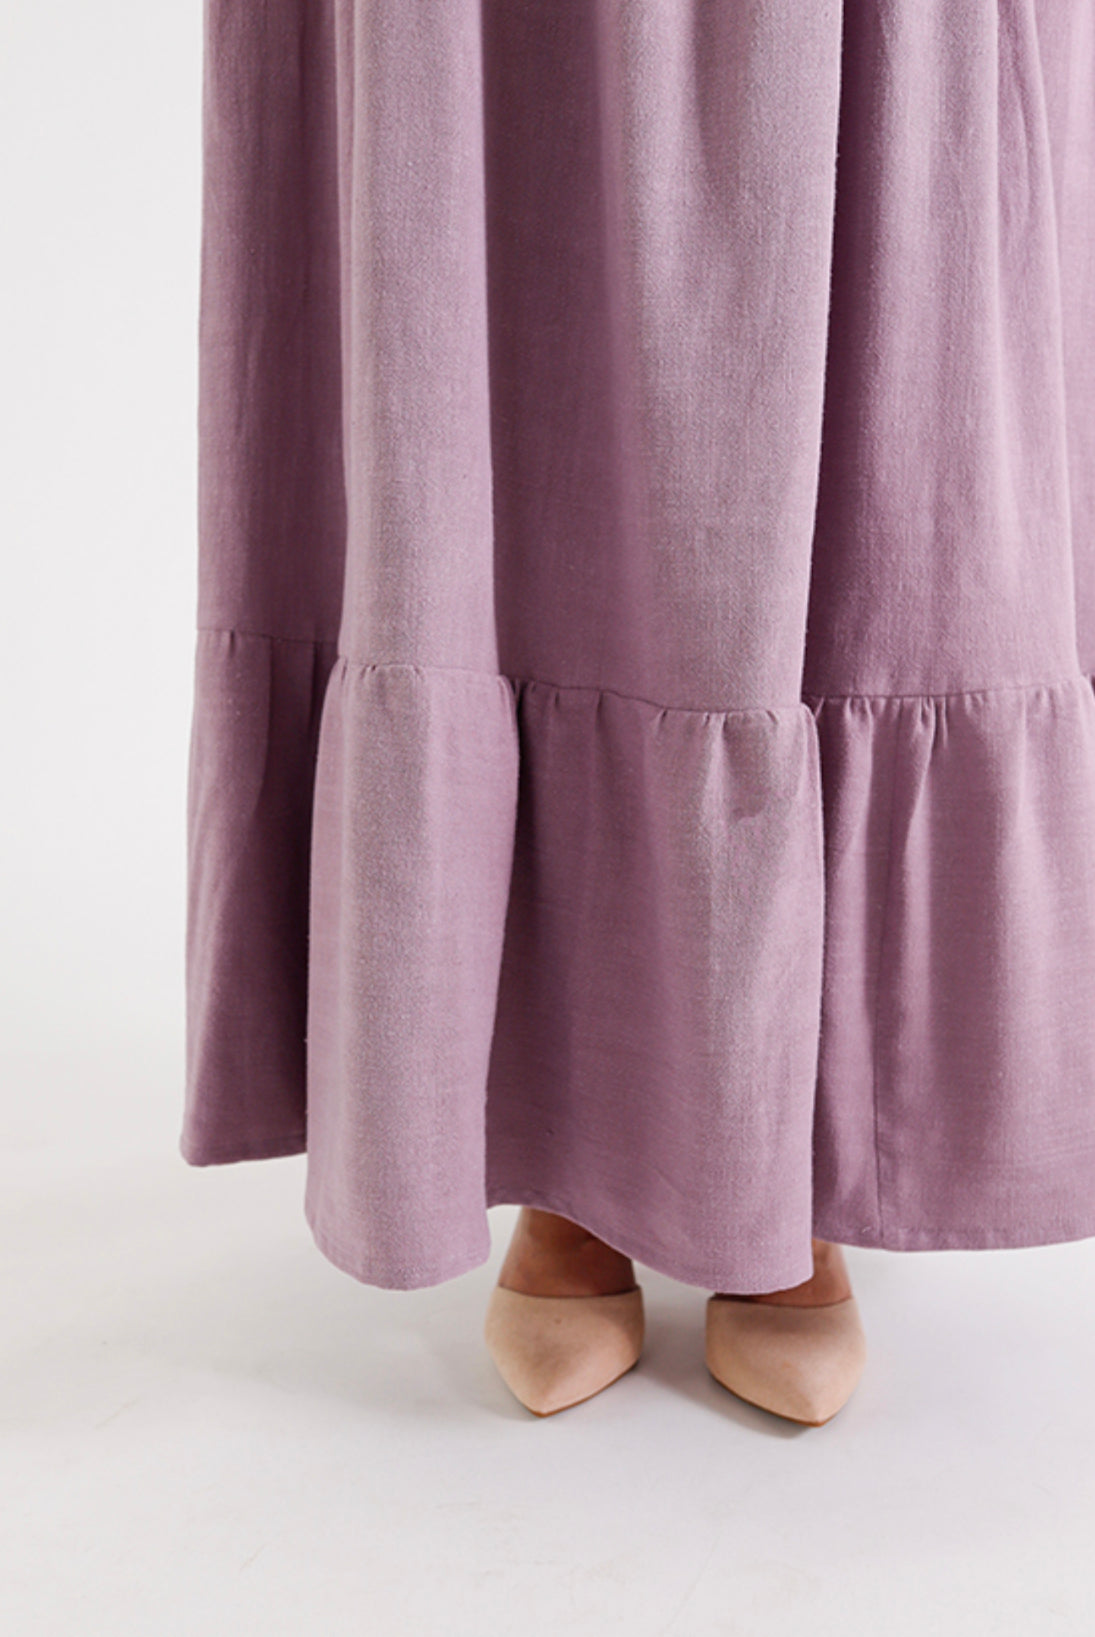 Chalk and Notch - Shay Dress Sewing Pattern